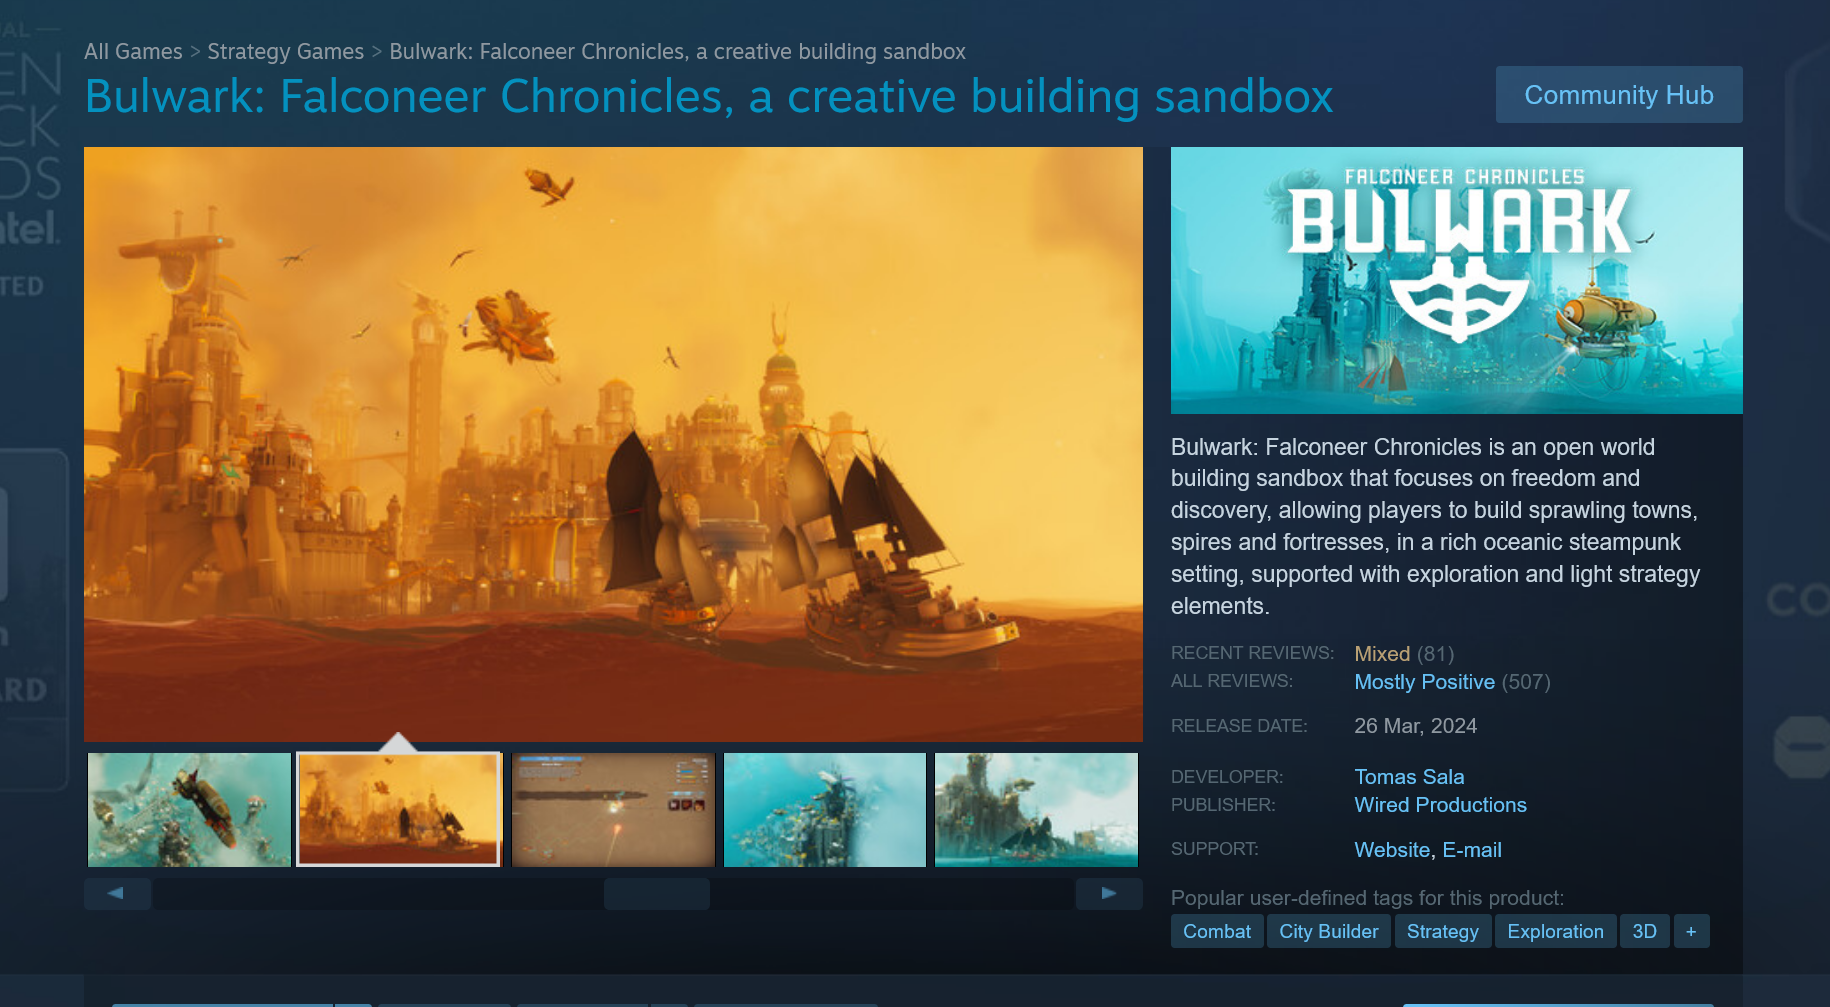 Bulwark: Falconeer Chronicles Steam page header